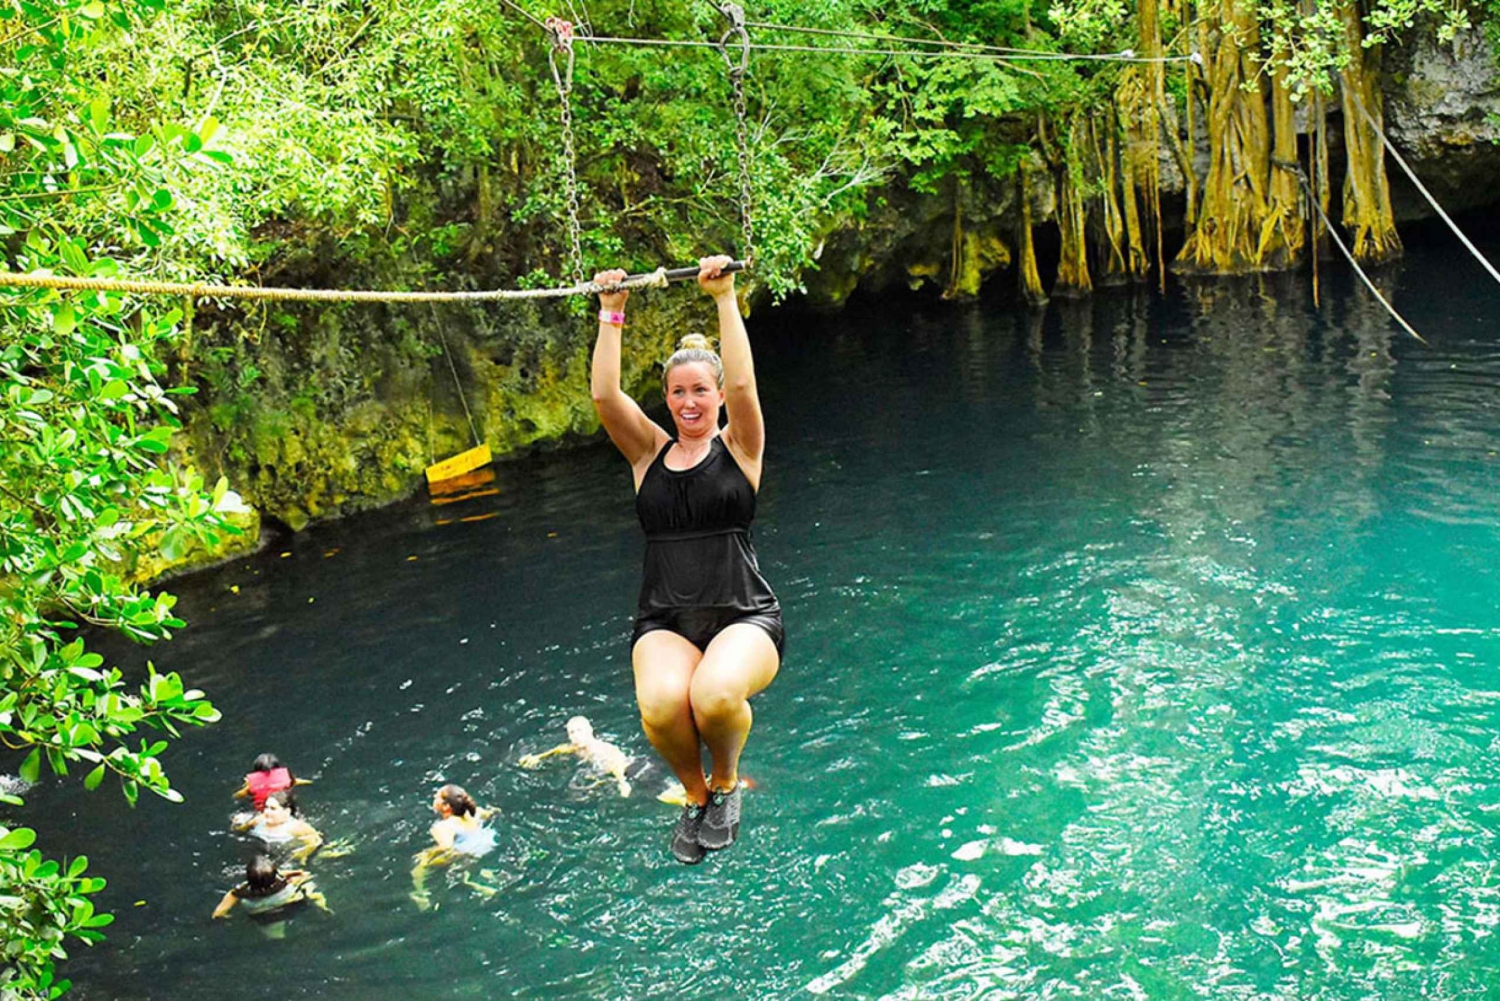 Extreme Adventure ATV Zipline and Cenote with pickup